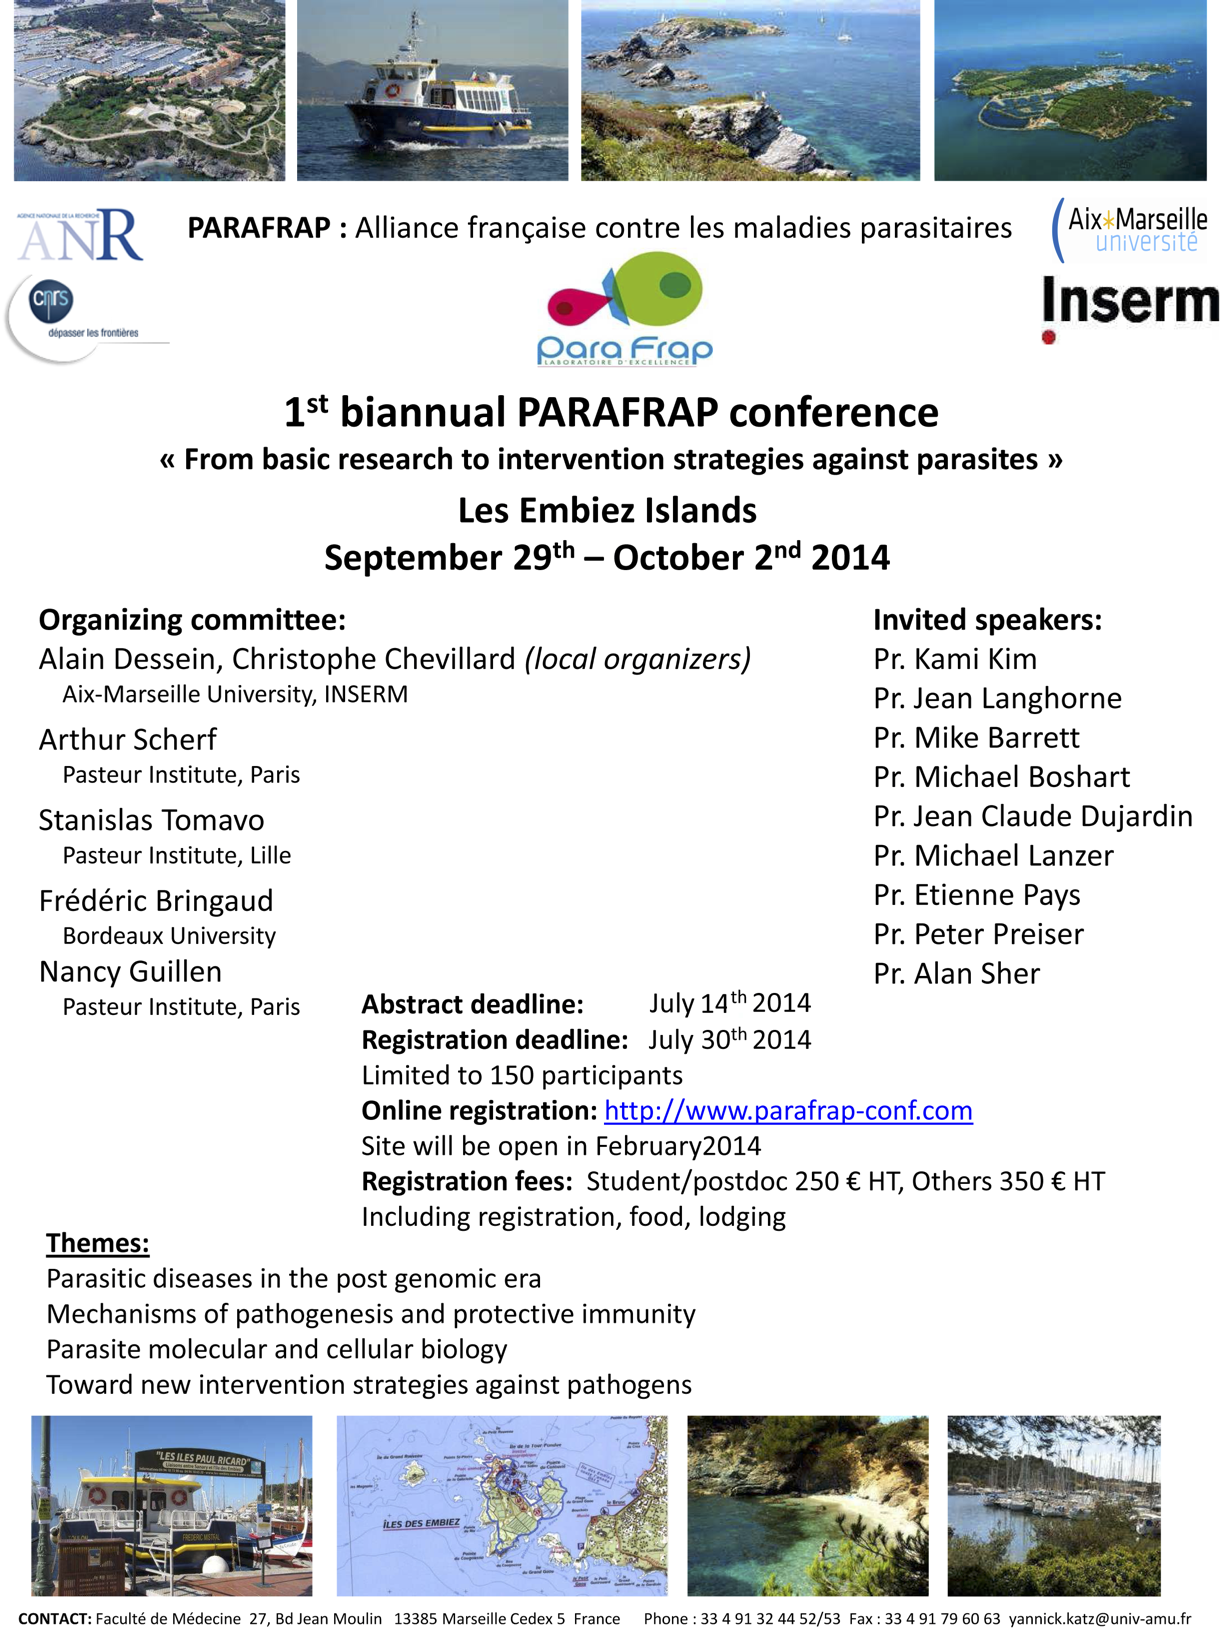 ParaFrap International Parasitology Meeting